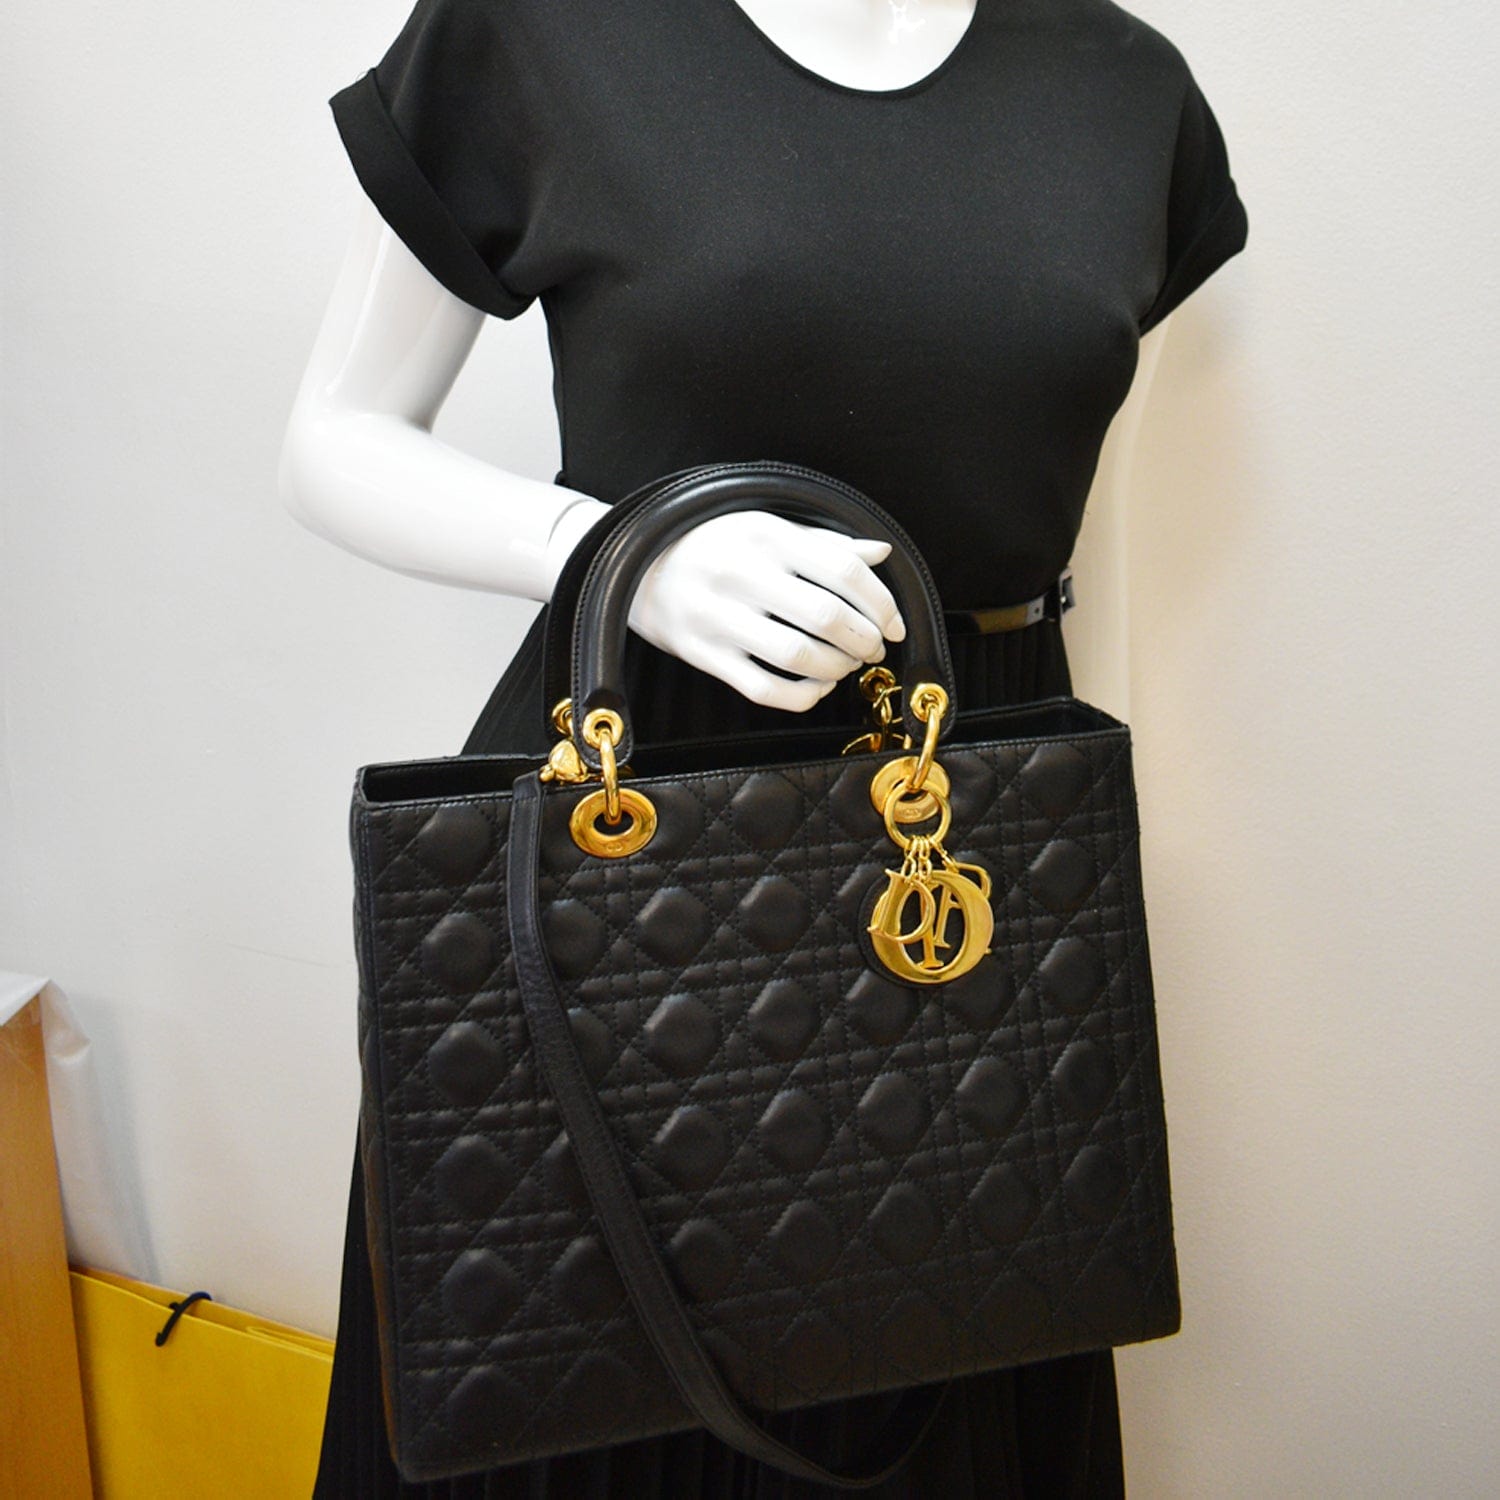 Dior Lady Dior Large Model Handbag